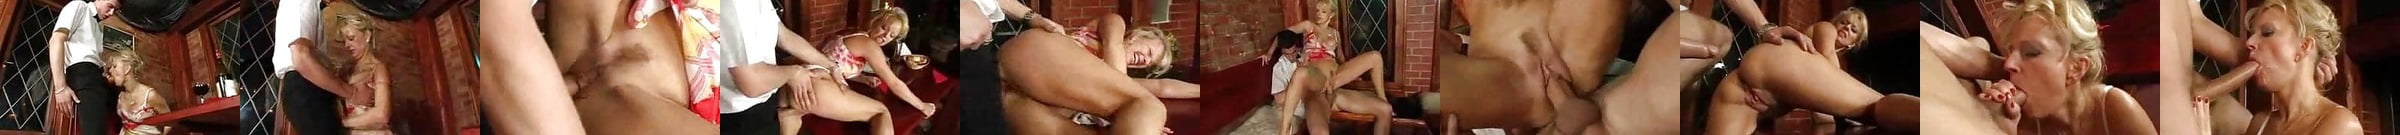 Italian Mature Barbara Gandalf Free Italian Mature Free Porn Video